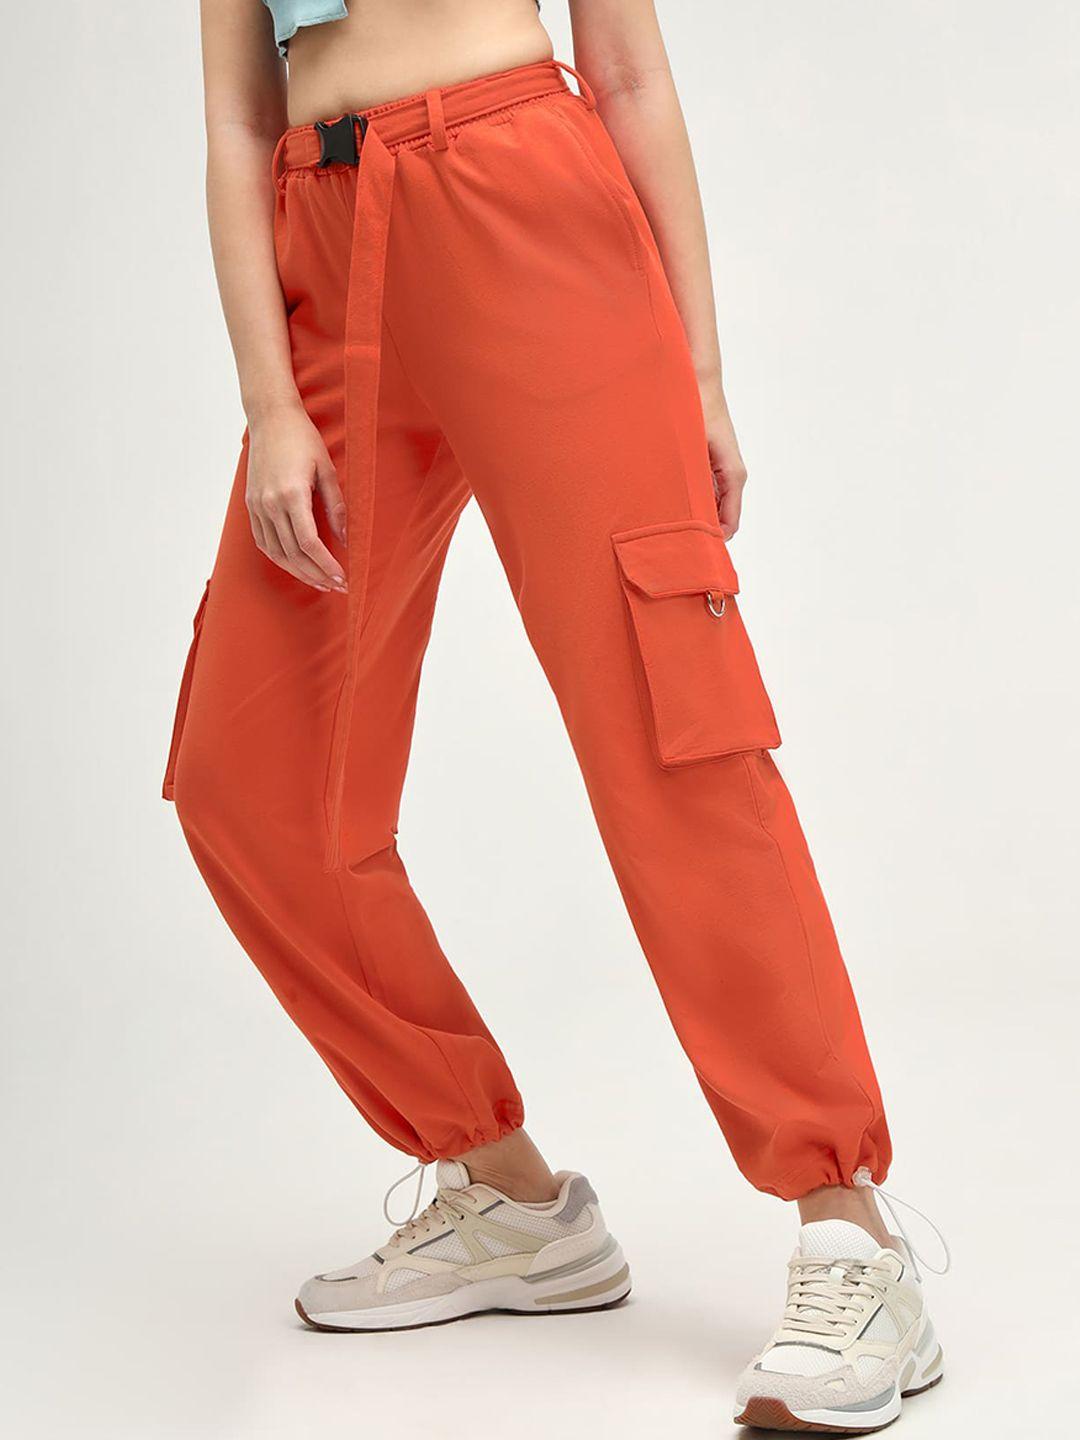 cava-women-orange-comfort-high-rise-joggers-trousers